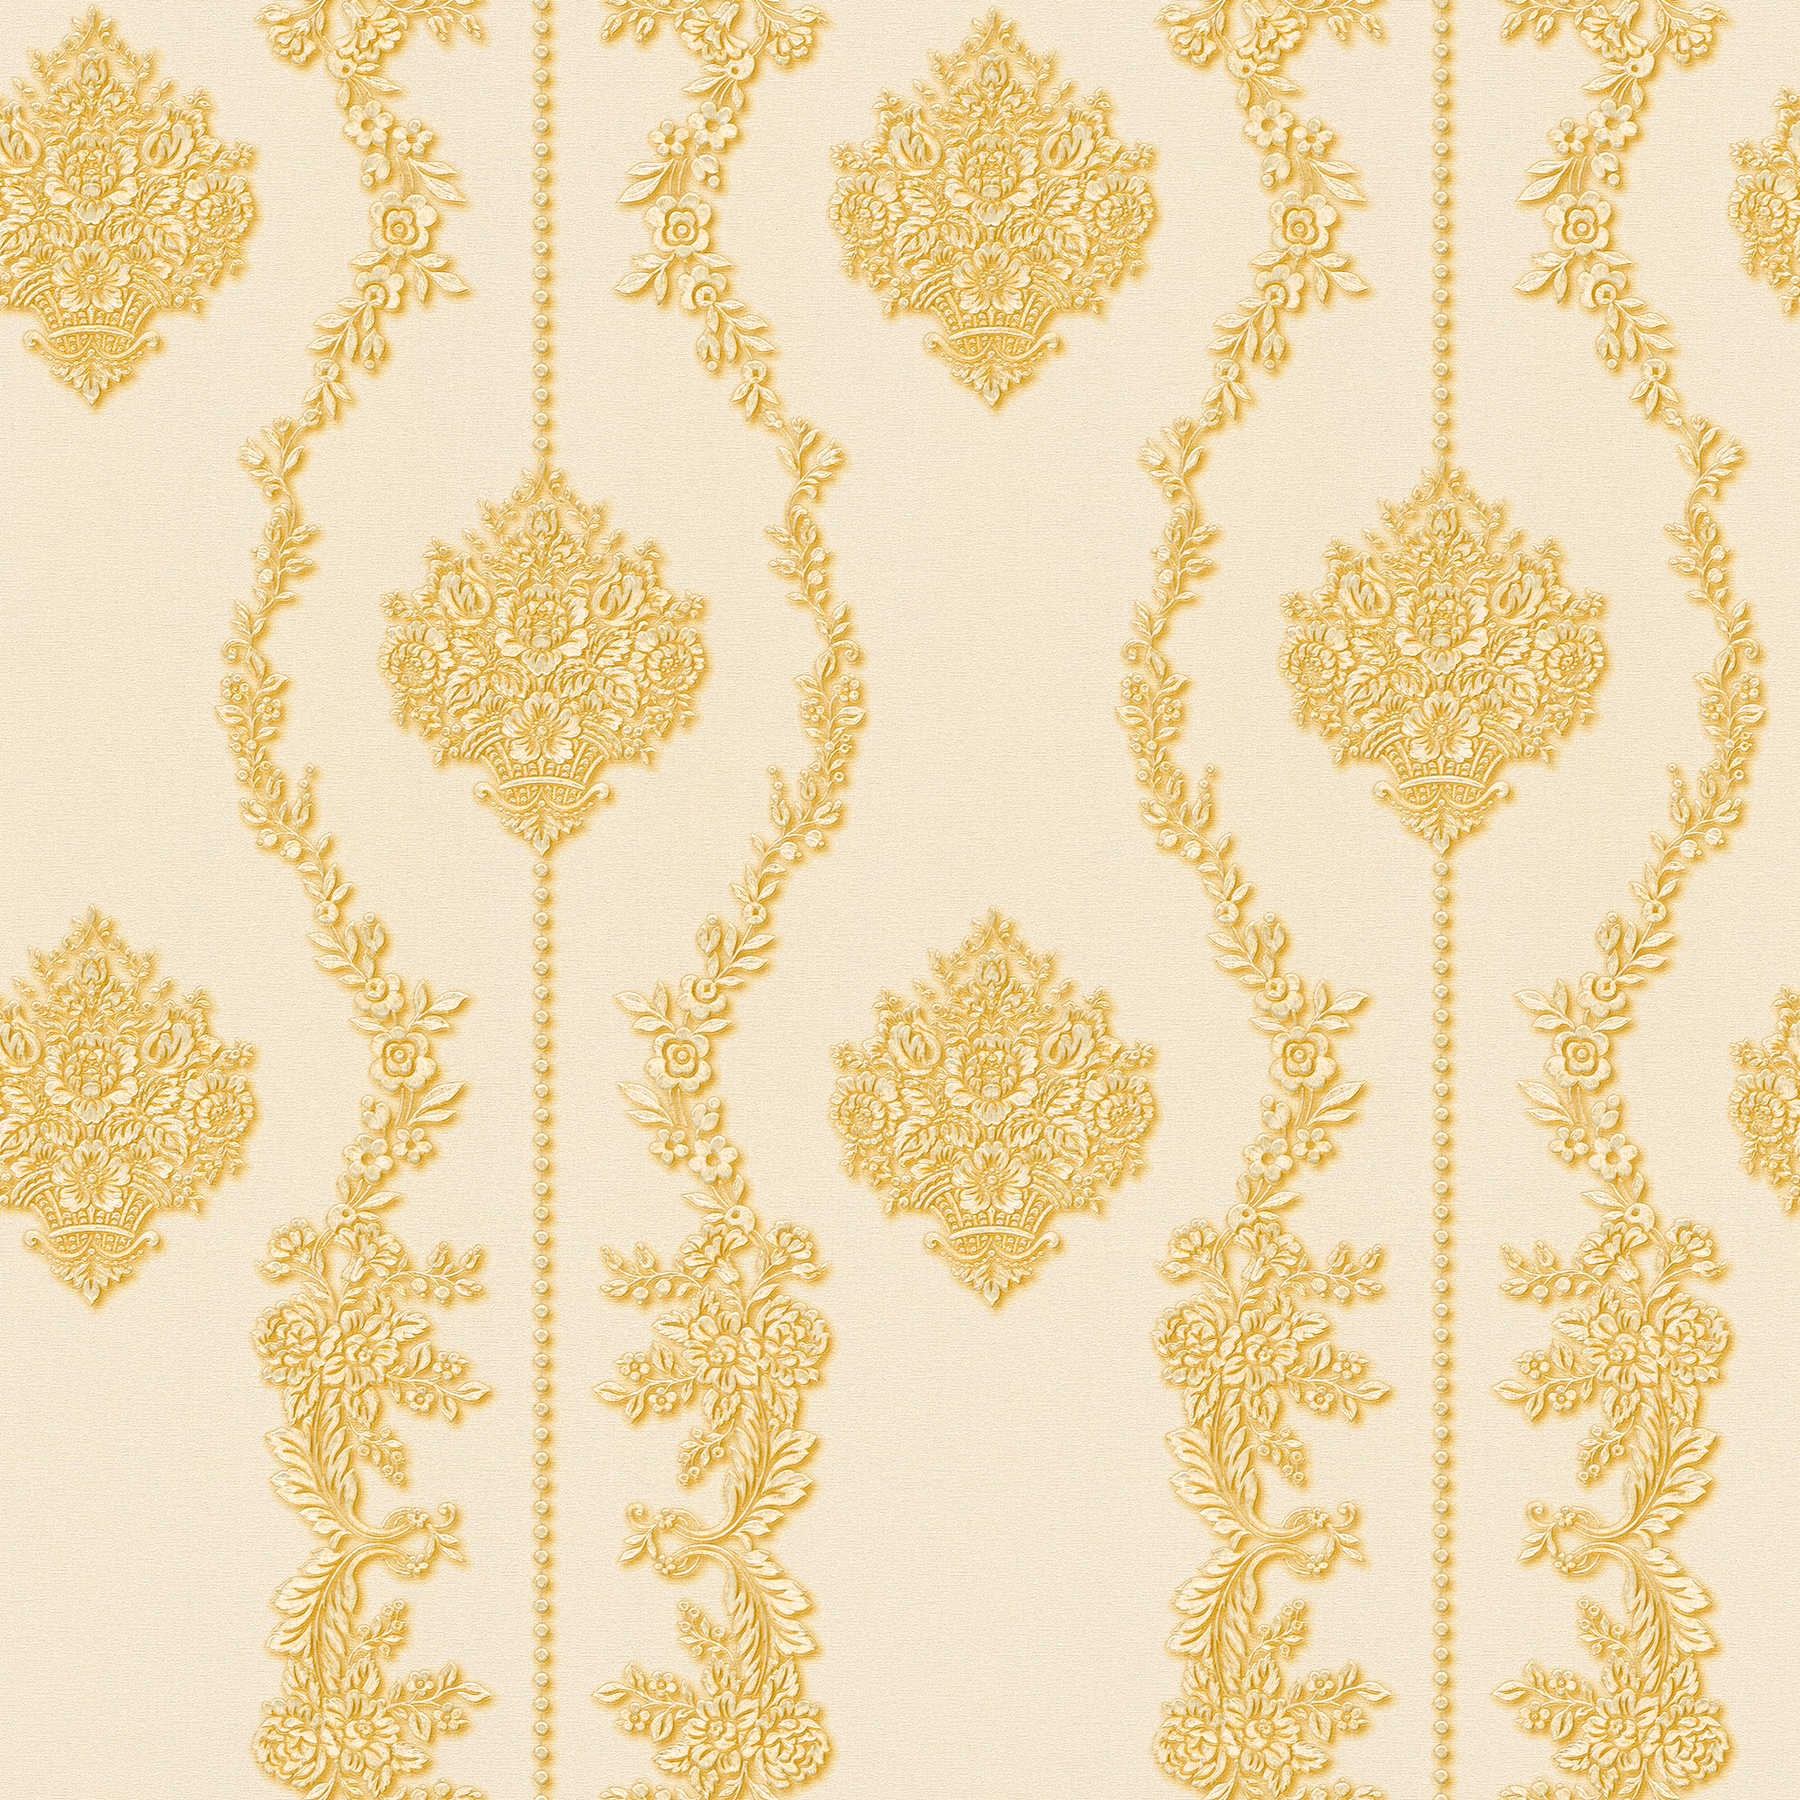 Ornamenttapete Blumenmuster & Ranken – Creme, Gold
